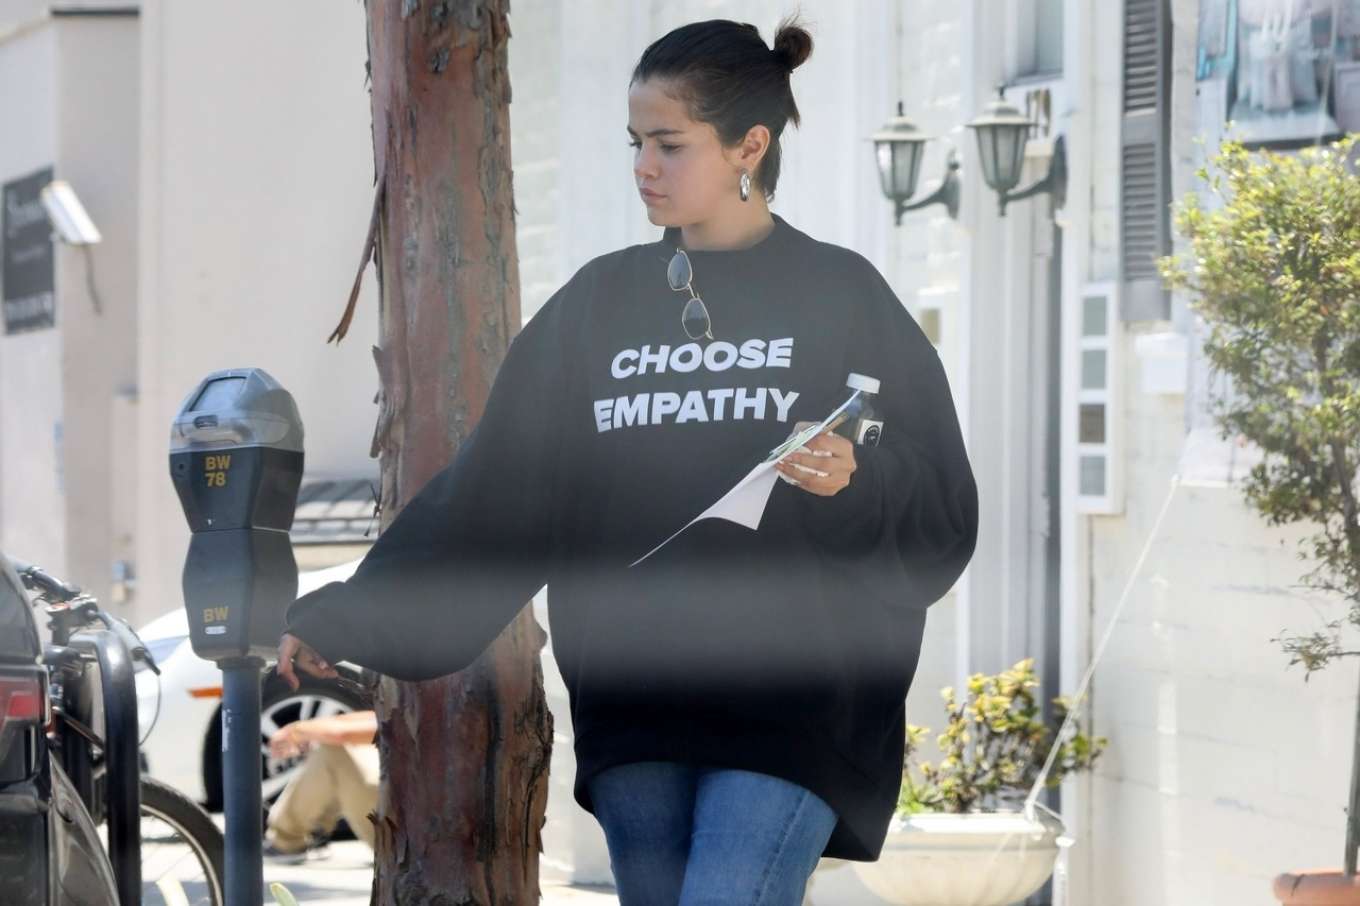 Selena Gomez â€“ Leaving a doctors office in Beverly Hills